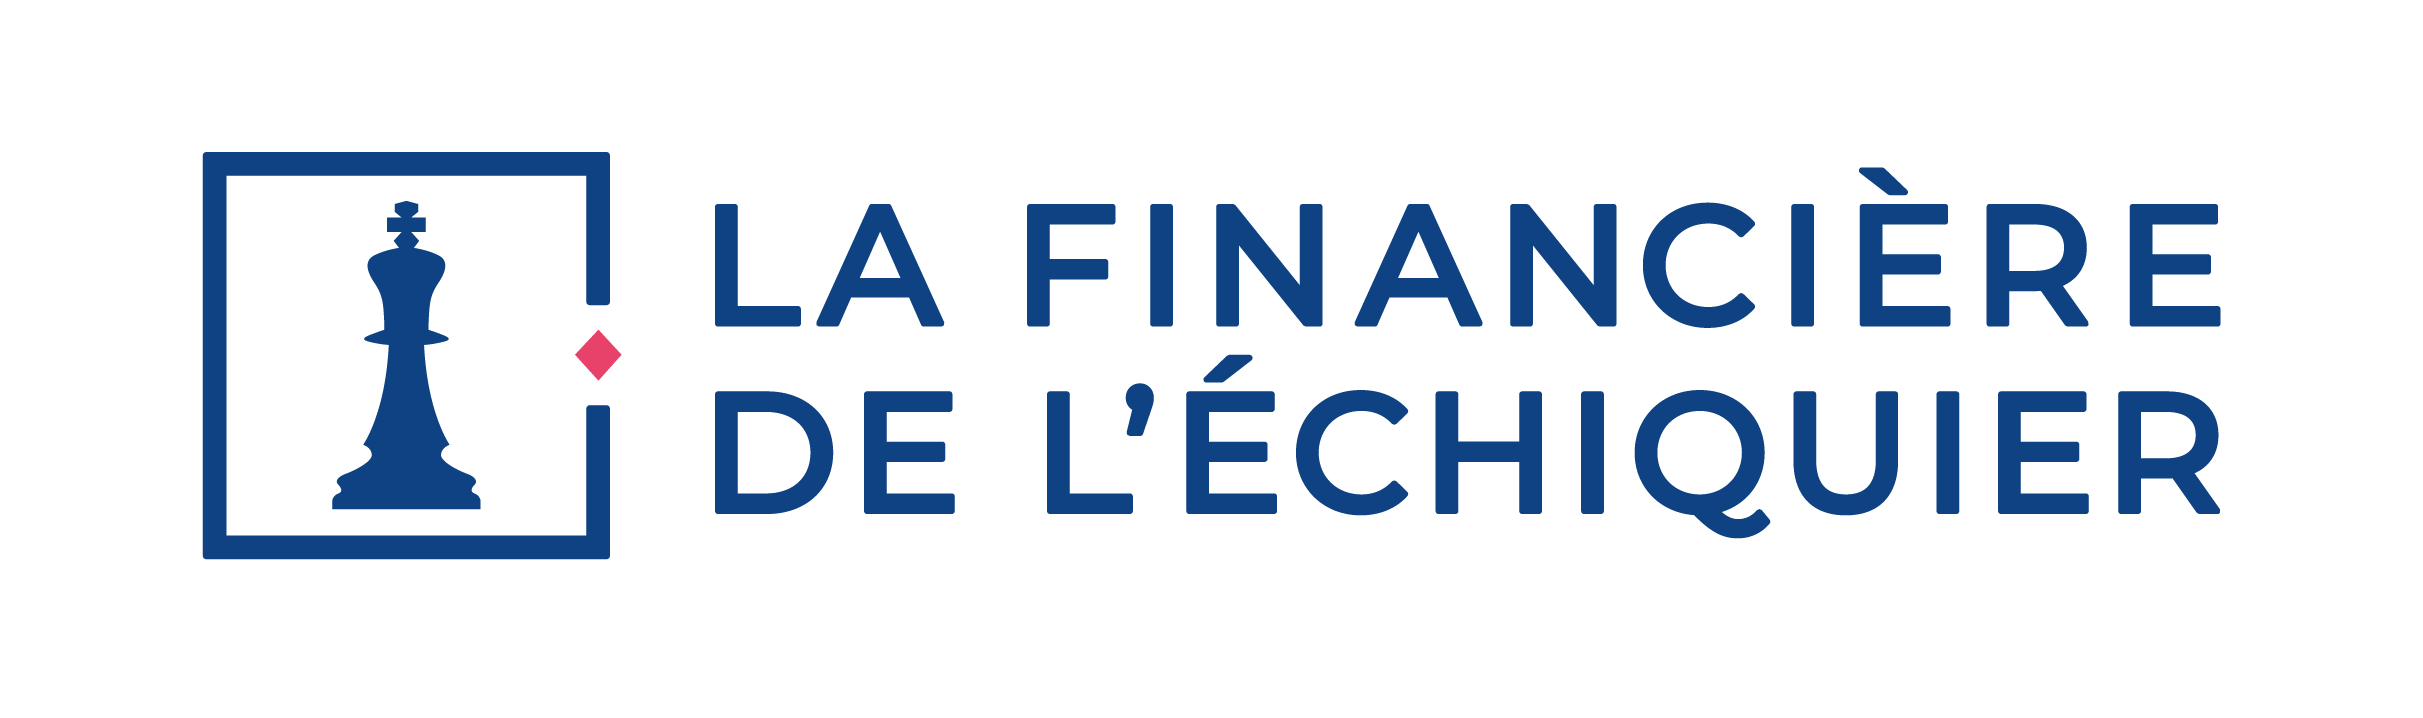 logo_LaFinanciereDeLEchiquier_quadri_WEB.png